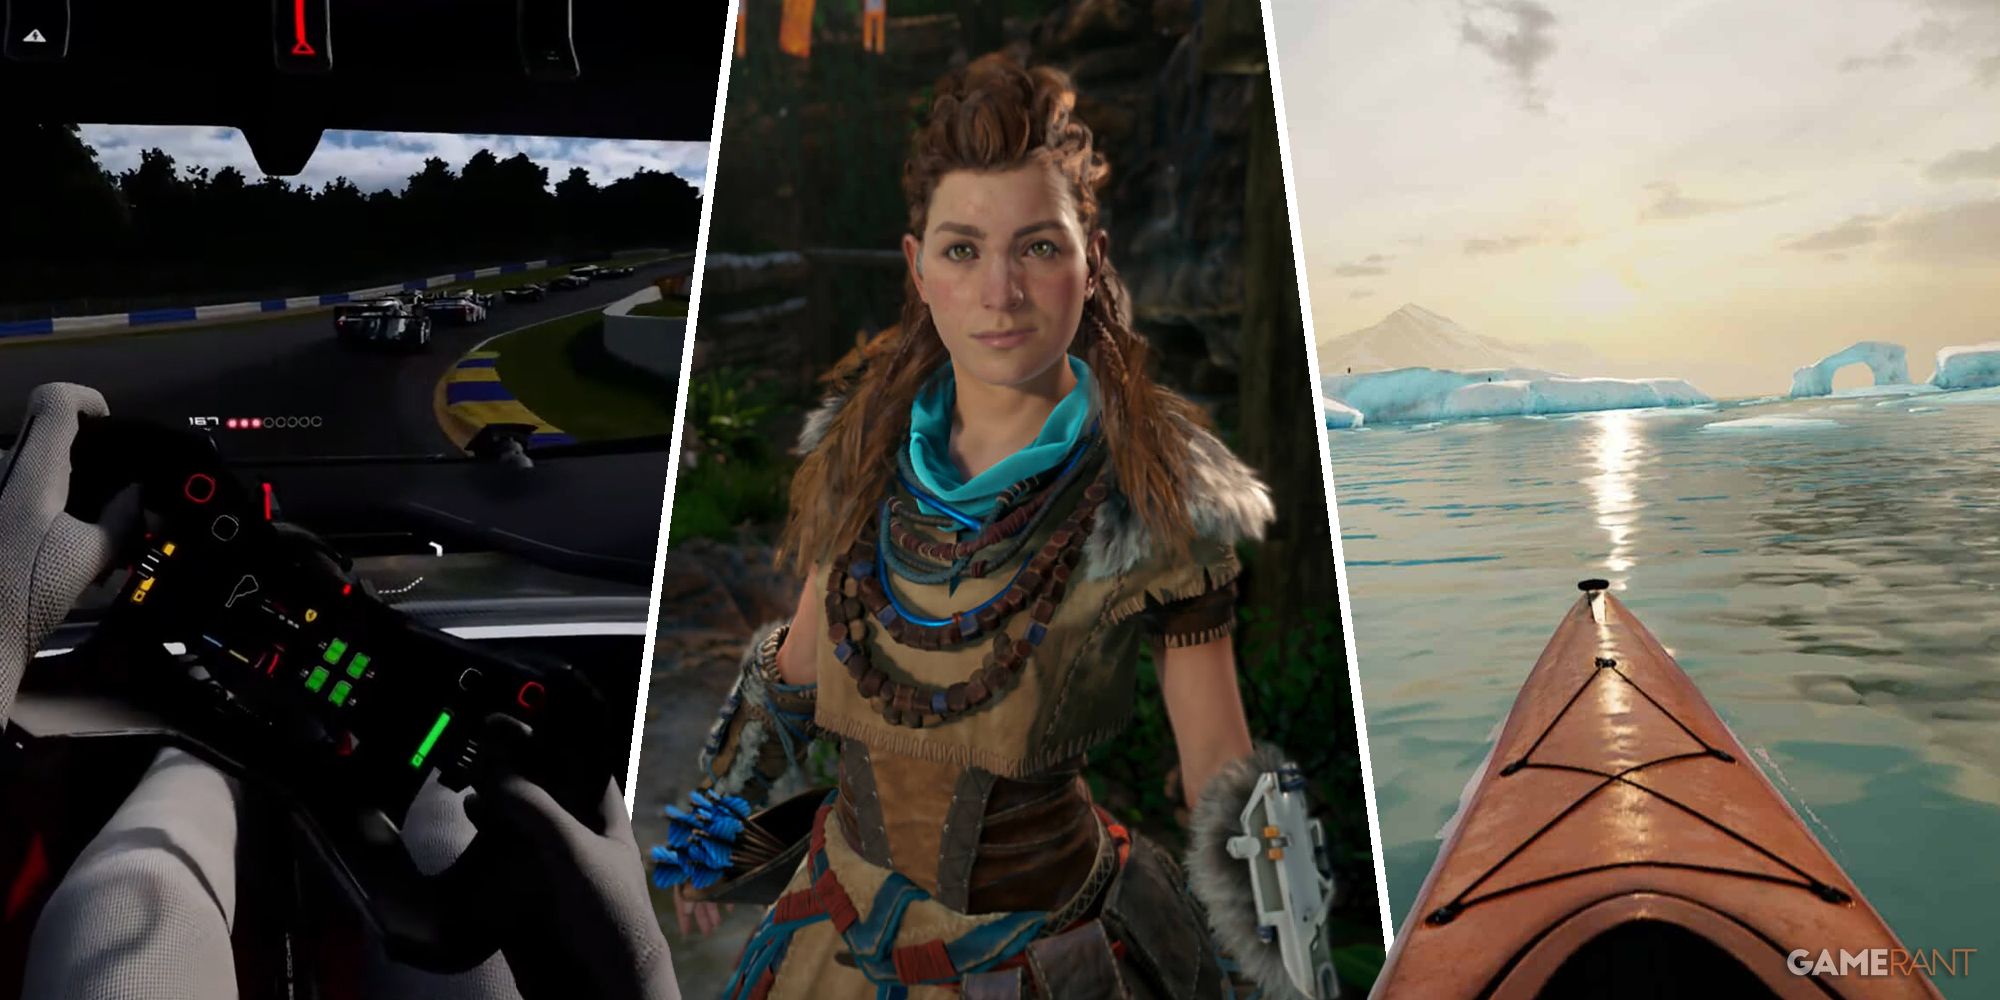 Gran Turismo 7, Horizon Call of the Mountain, and Kayak VR: Mirage